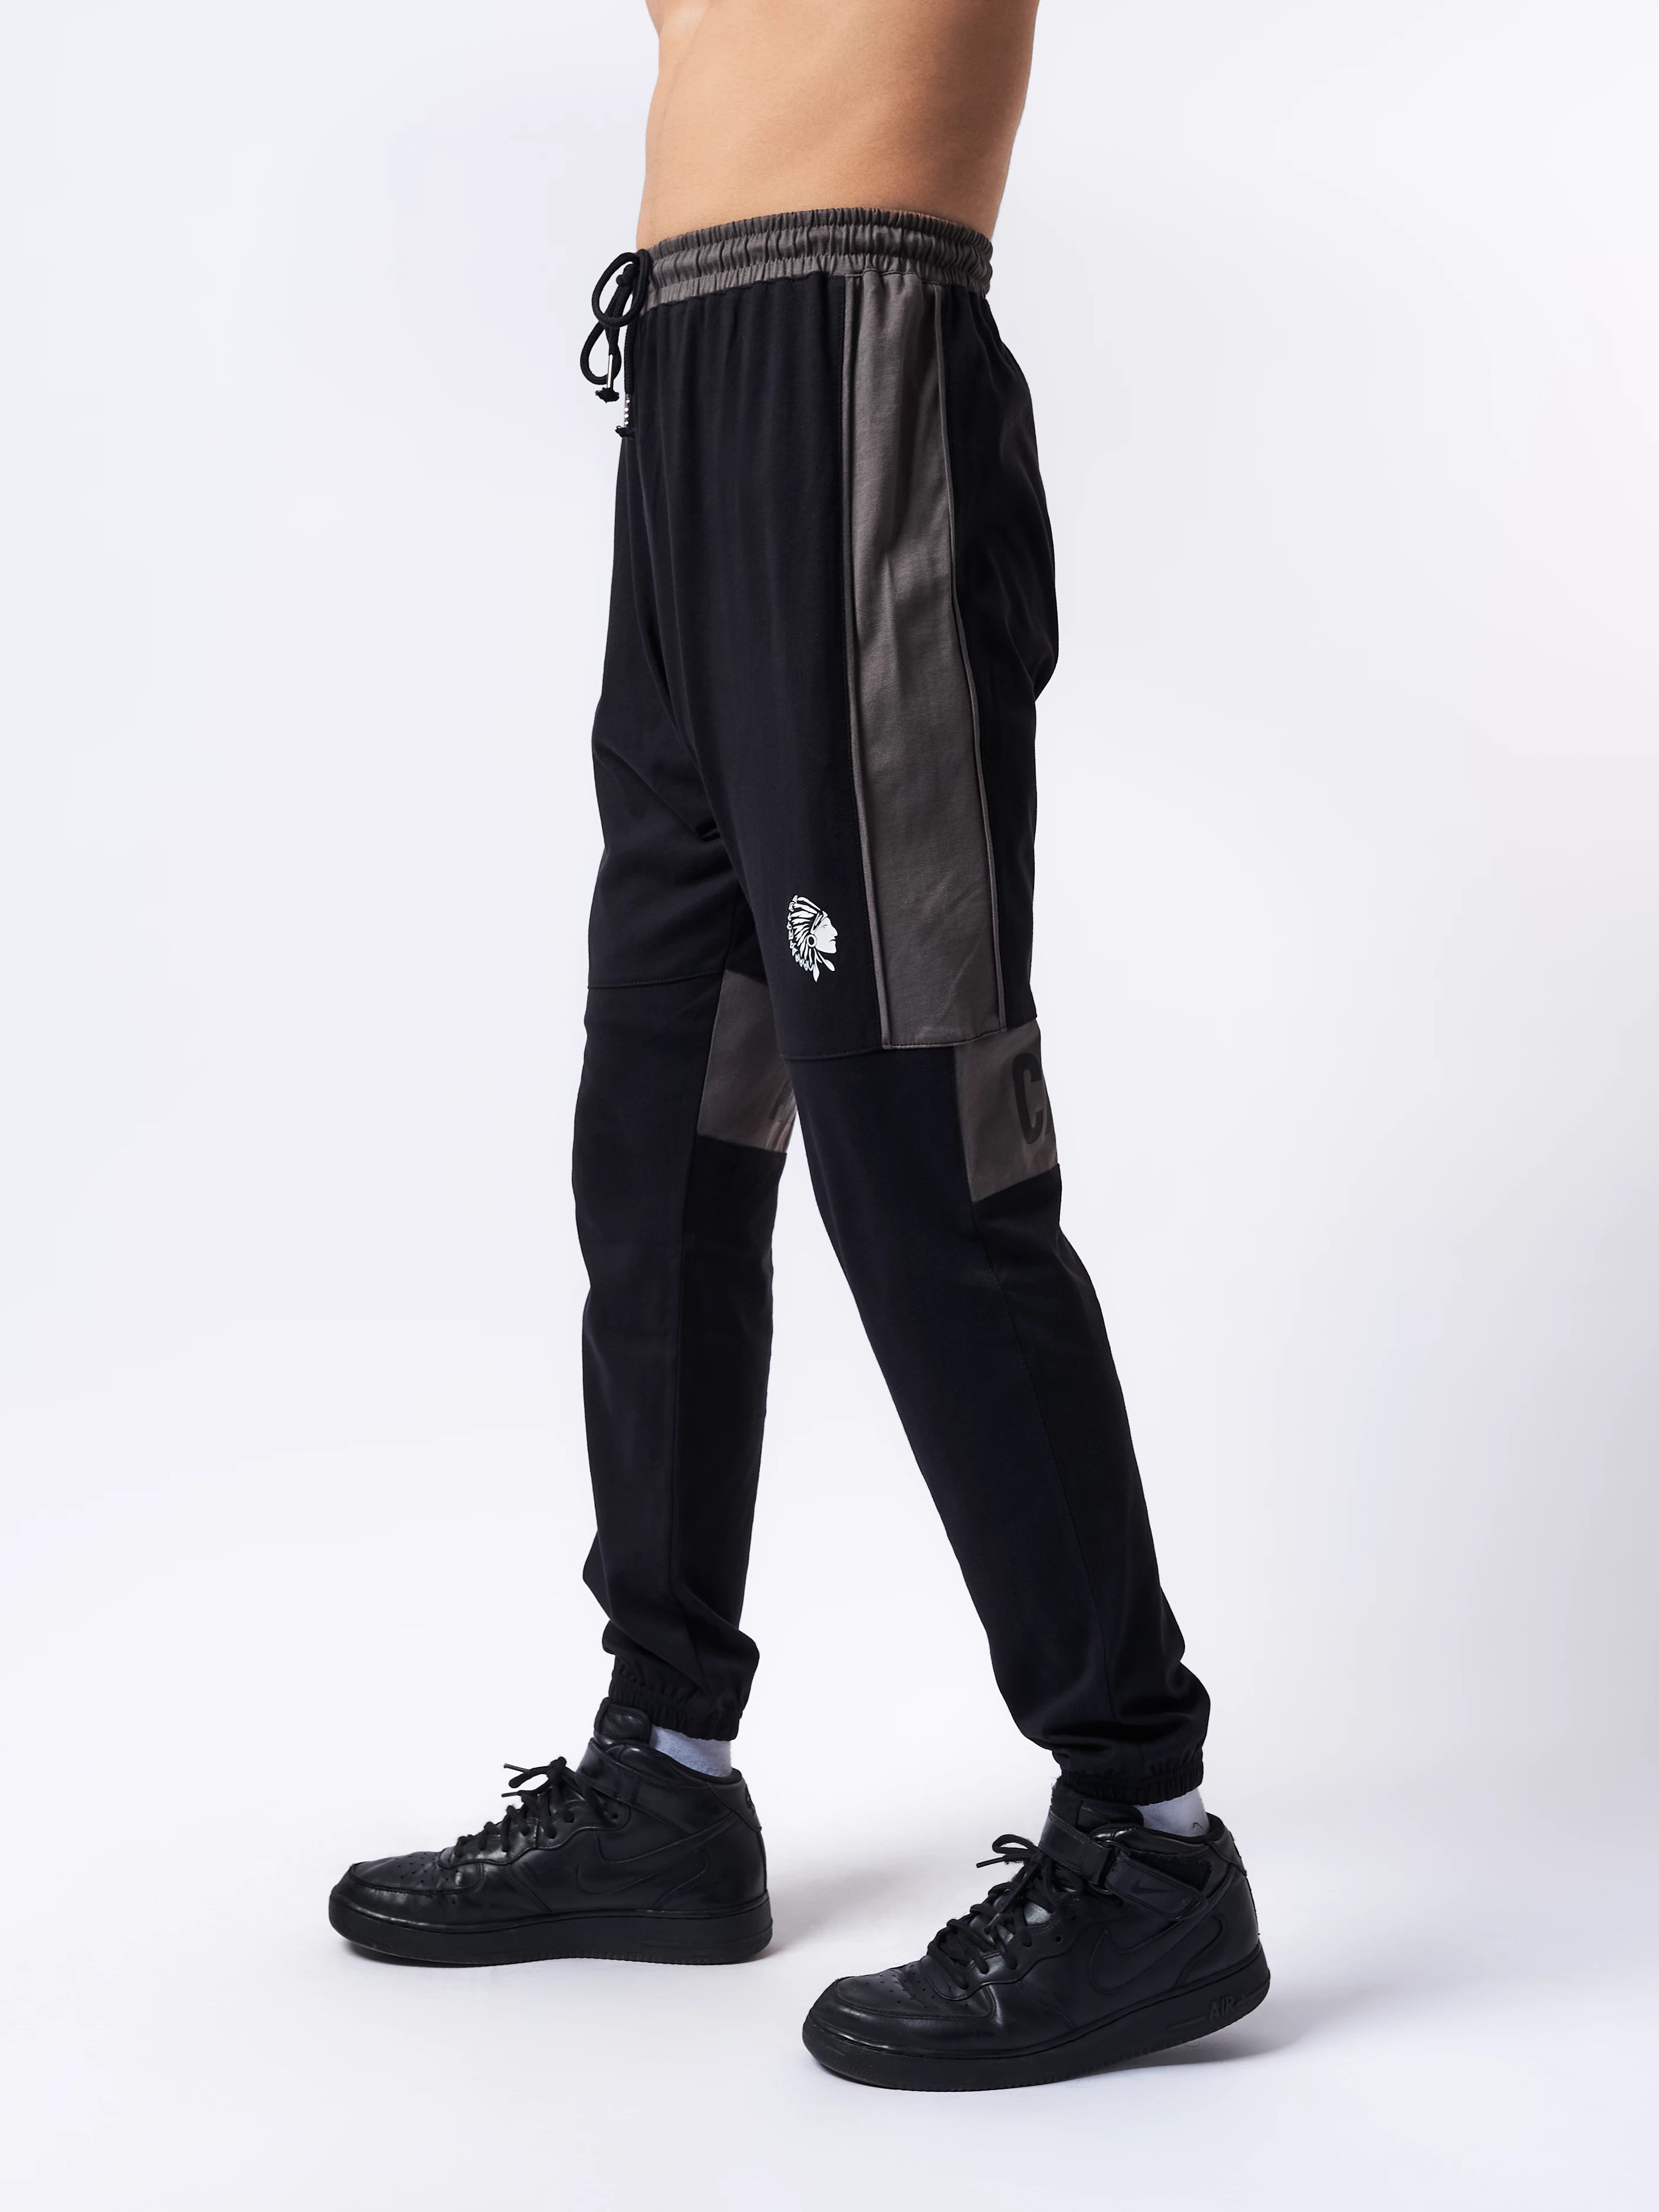 Nike Woven Unlined Trouser Pants Grey Move to Zero Revival DM5610 Mens 30 |  eBay